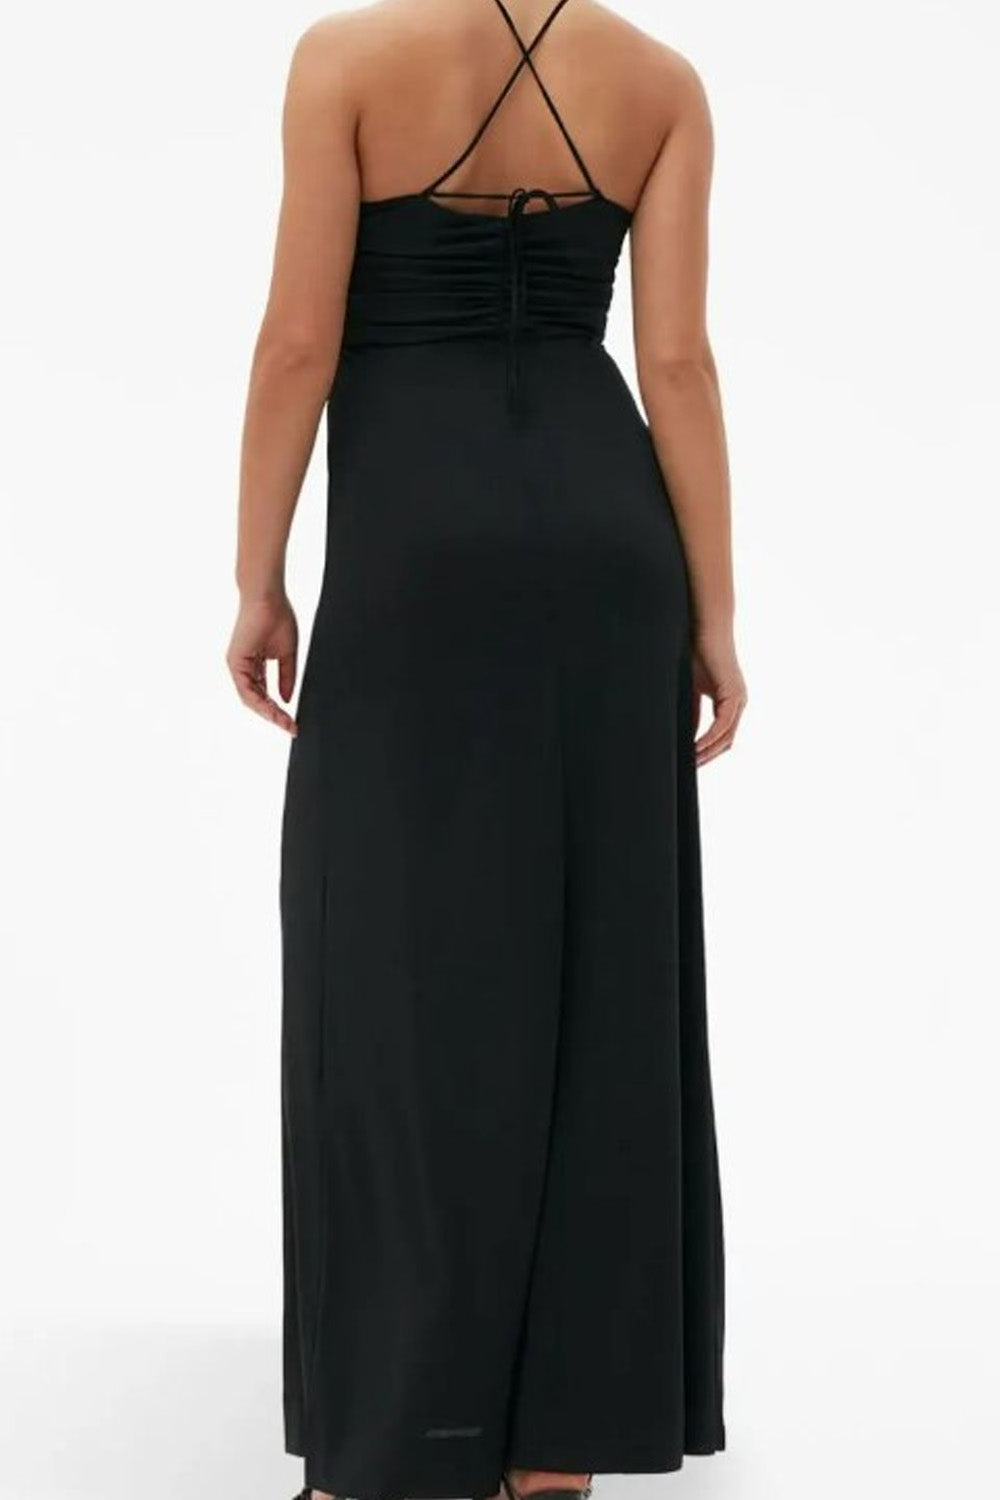 Iridescent Black Dress